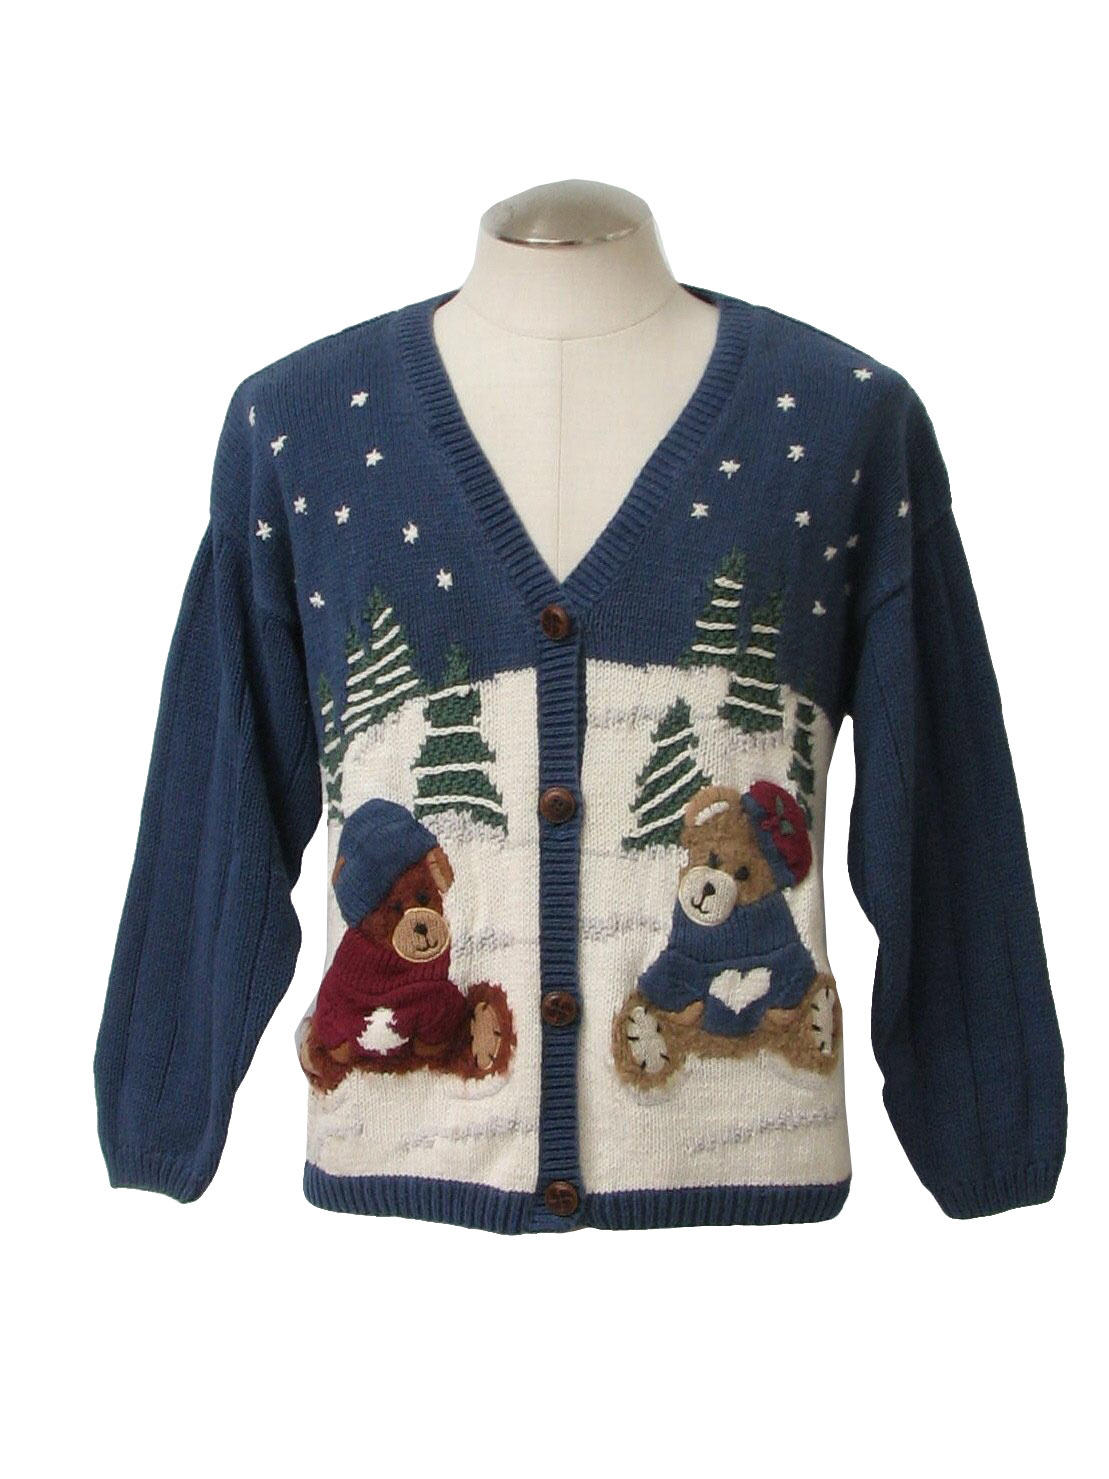 Bear-ific Ugly Christmas Cardigan Sweater: -Mandal Bay- Unisex blue ...